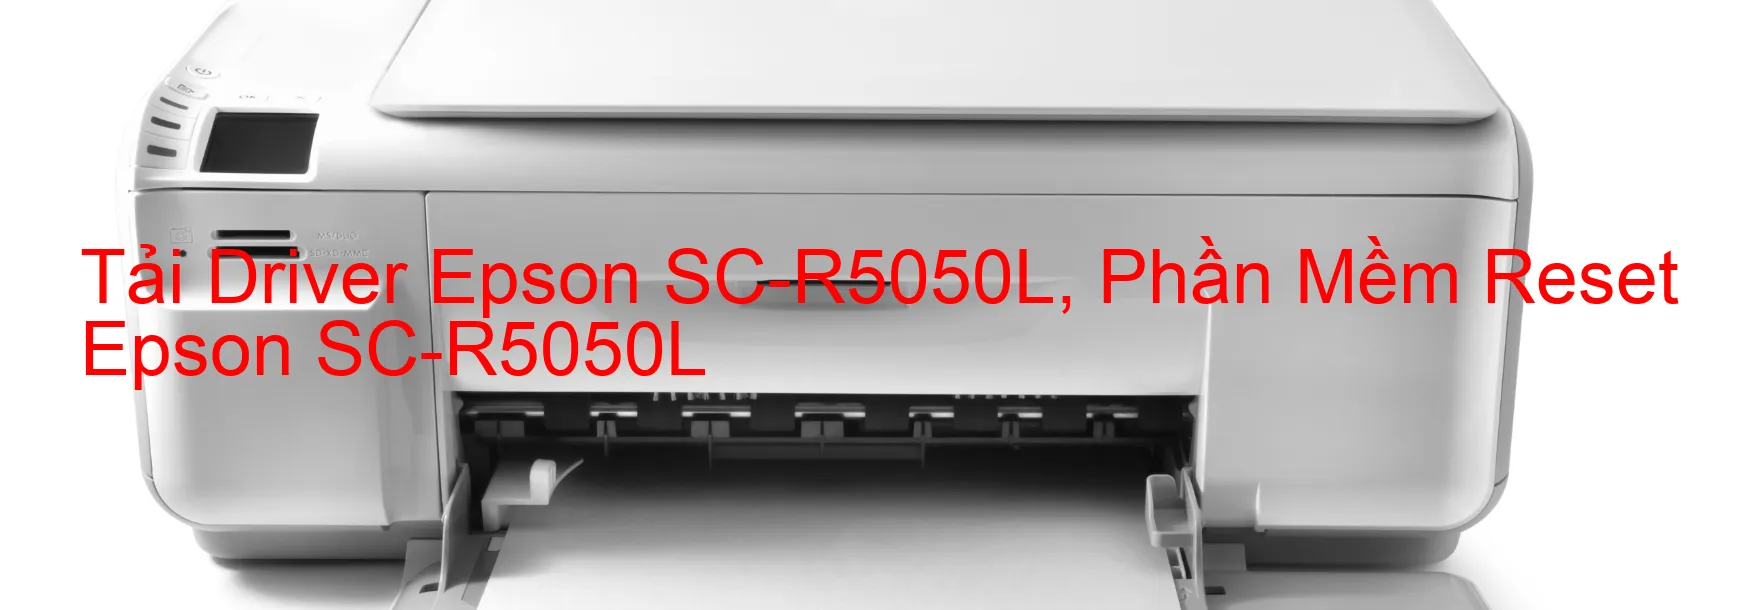 Driver Epson SC-R5050L, Phần Mềm Reset Epson SC-R5050L